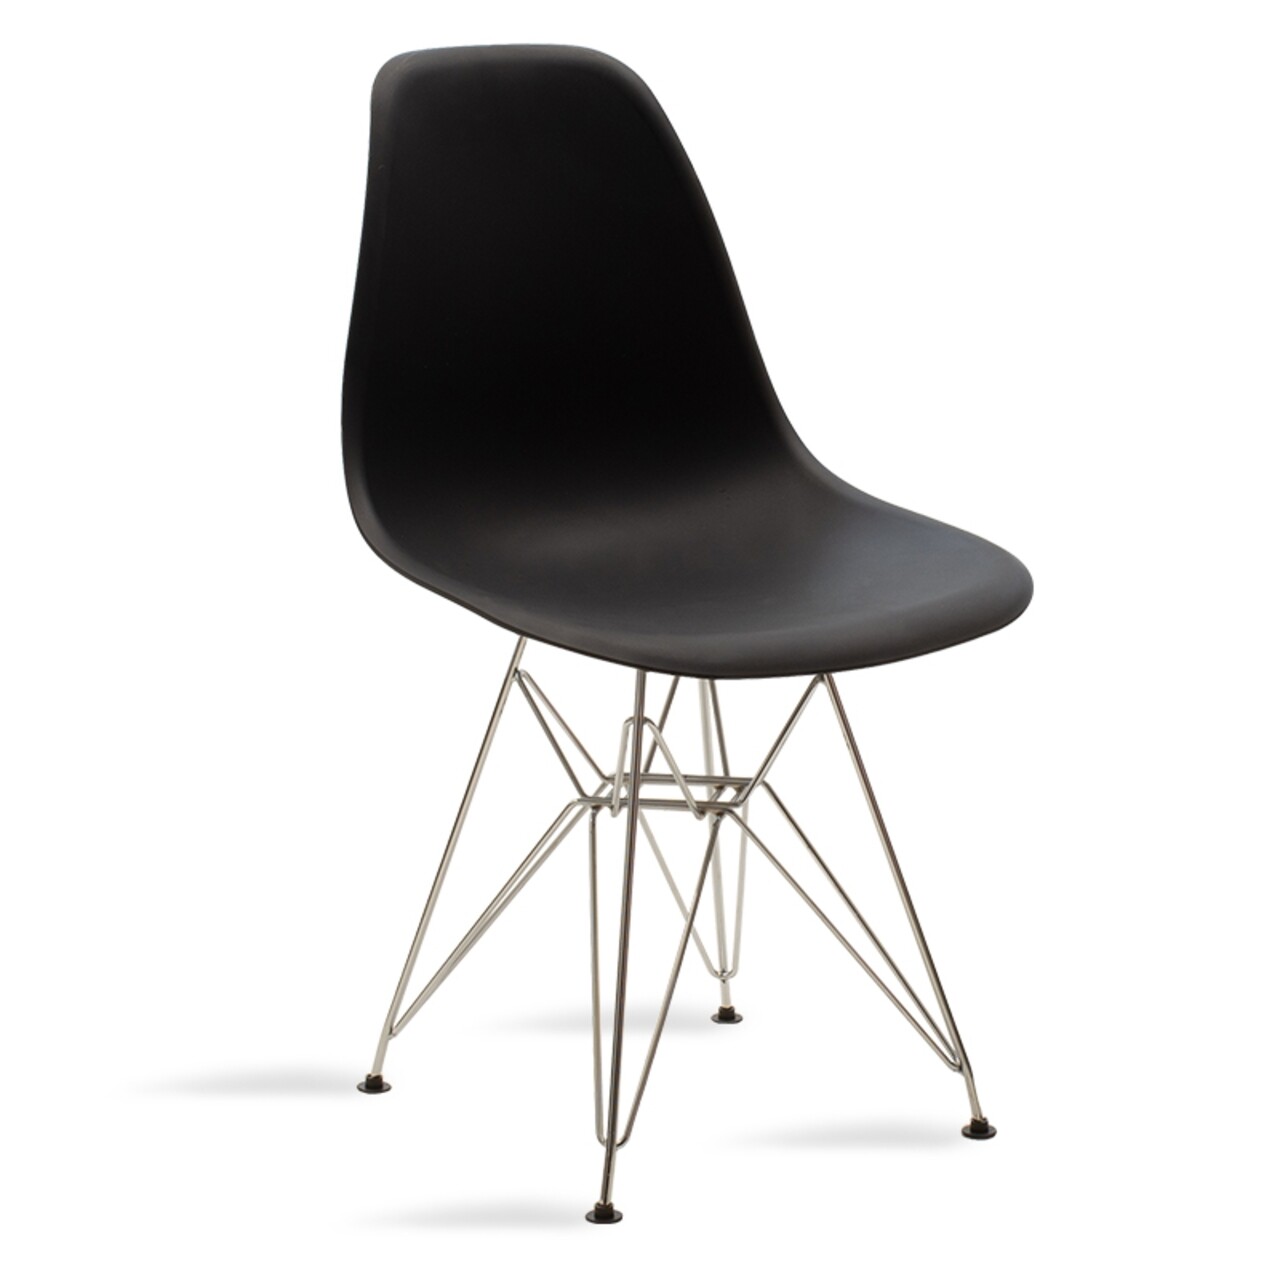 Claus szék, Pakoworld, 45,5x51x83 cm, fém / polipropilén, fekete